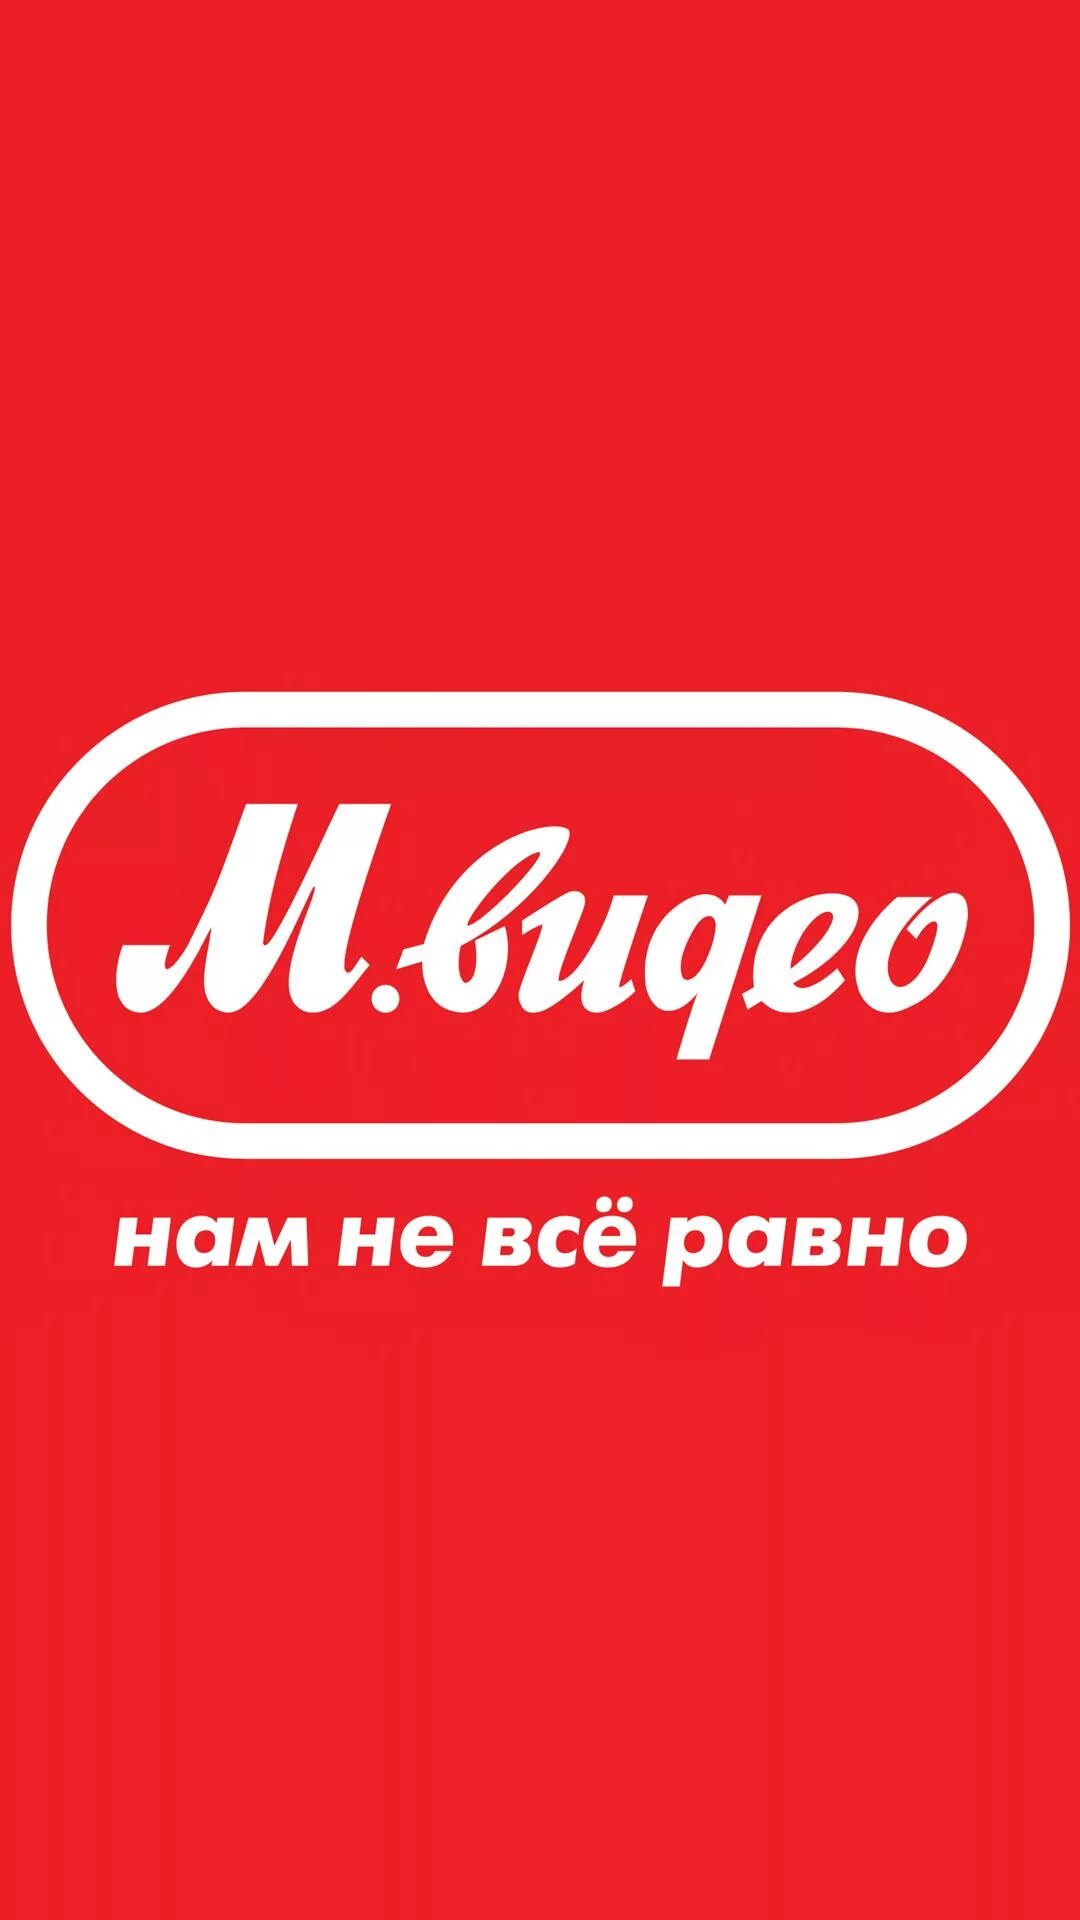 Мвидео ru интернет магазин. М видео. Мвидео лого. Магазин м видео логотип. М видео СПБ.